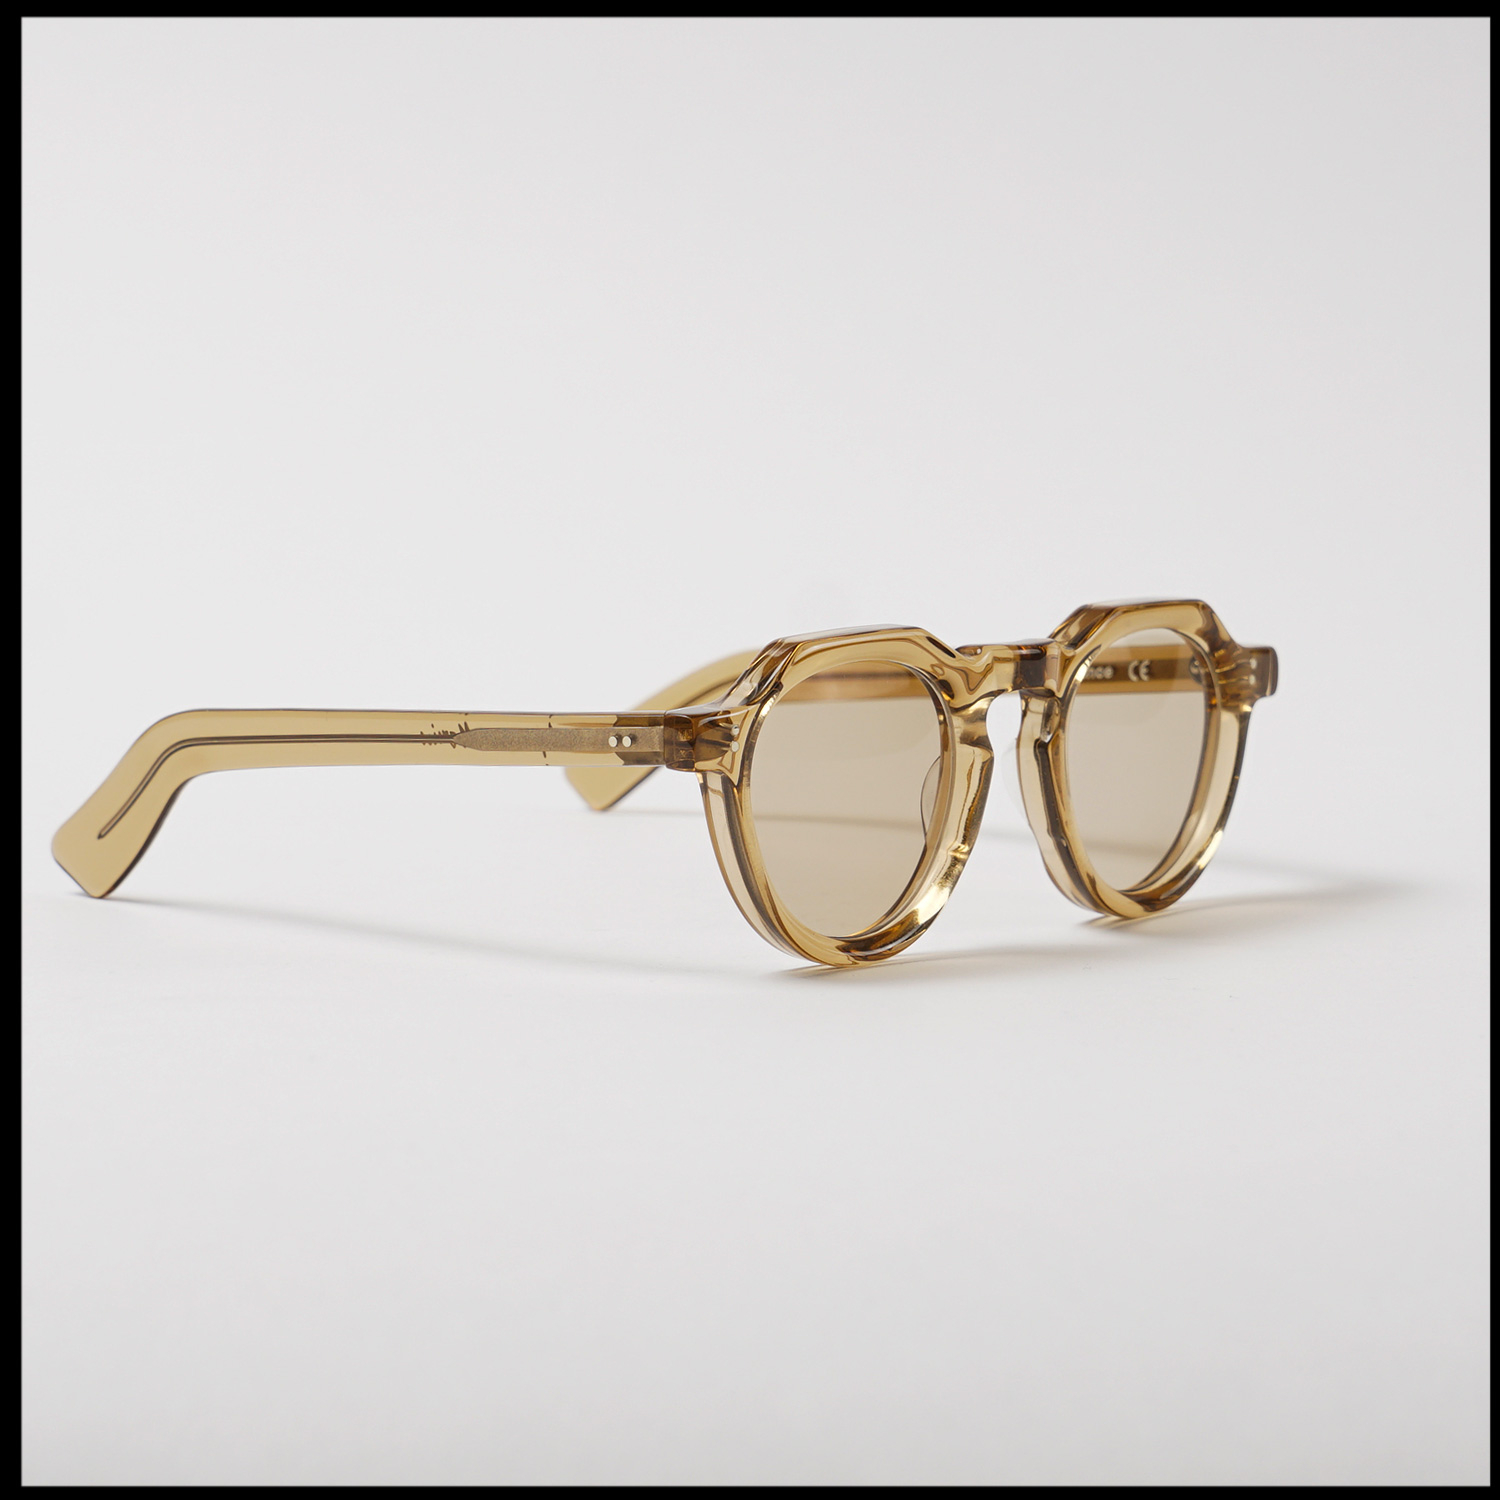 Sunglasses MOD.01 TRANSITIONS in Hazelnut color by Arpenteur